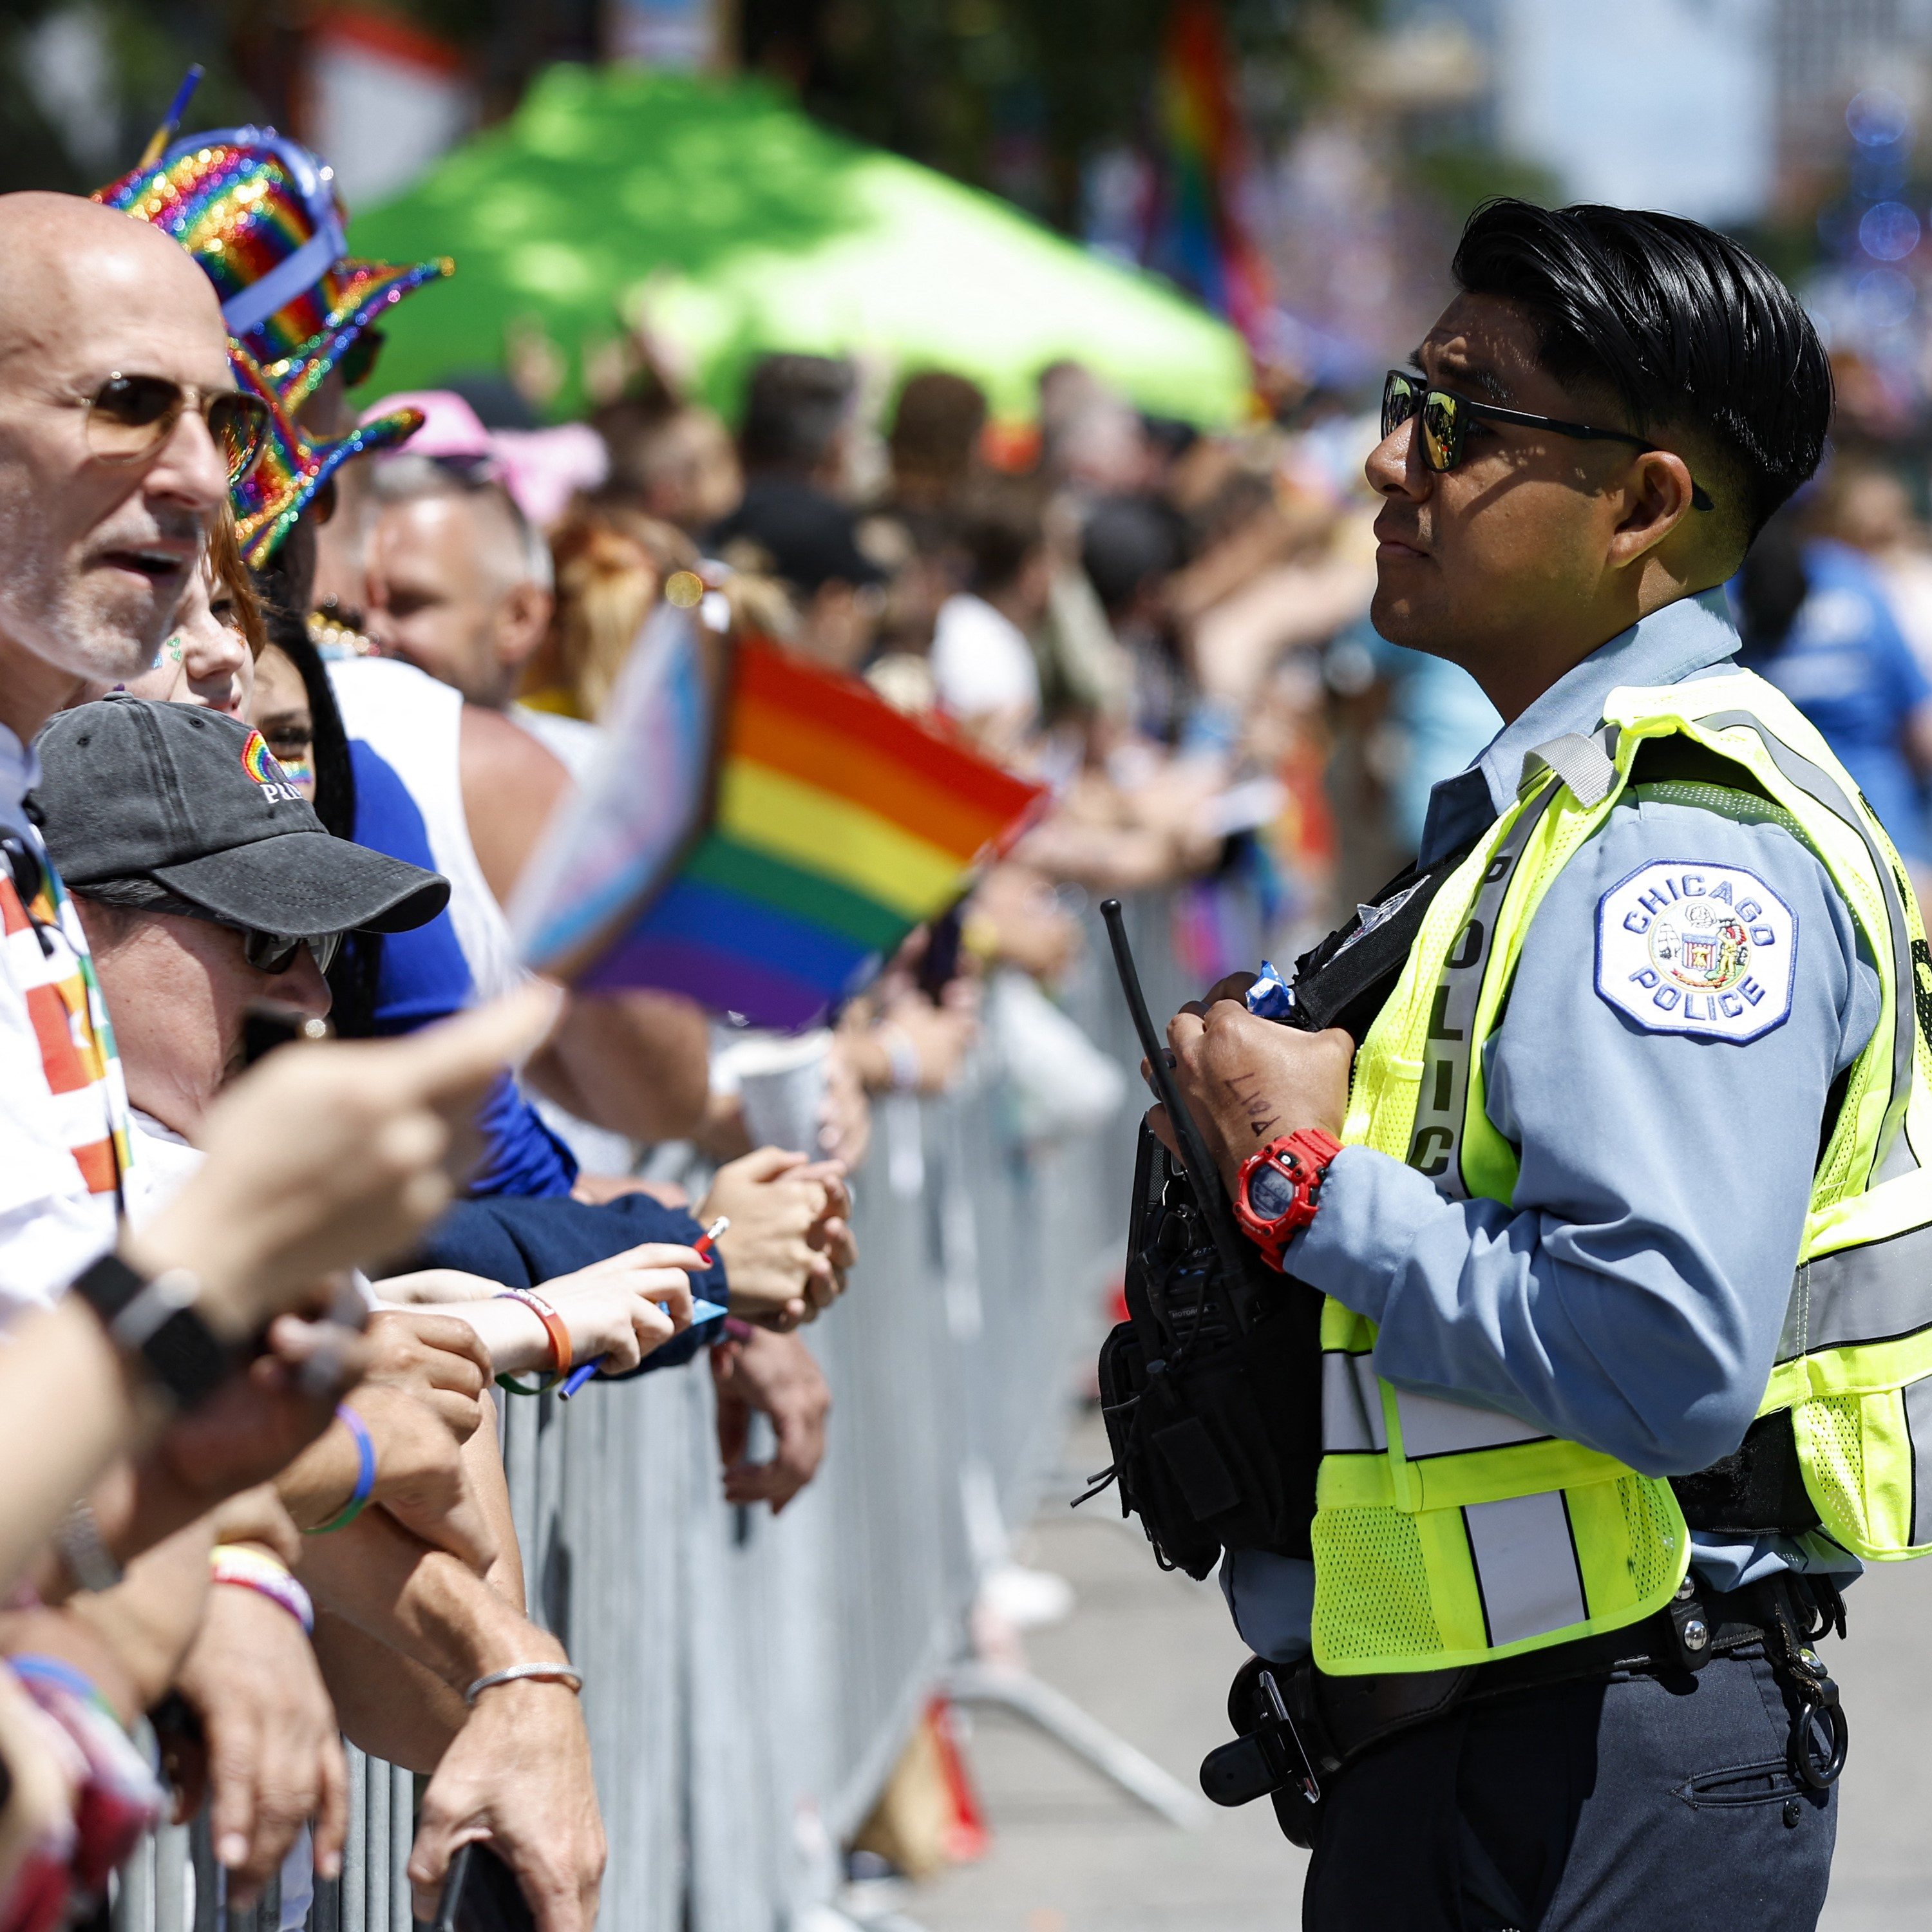 Columnist calls for Chicago Pride Parade to relocate